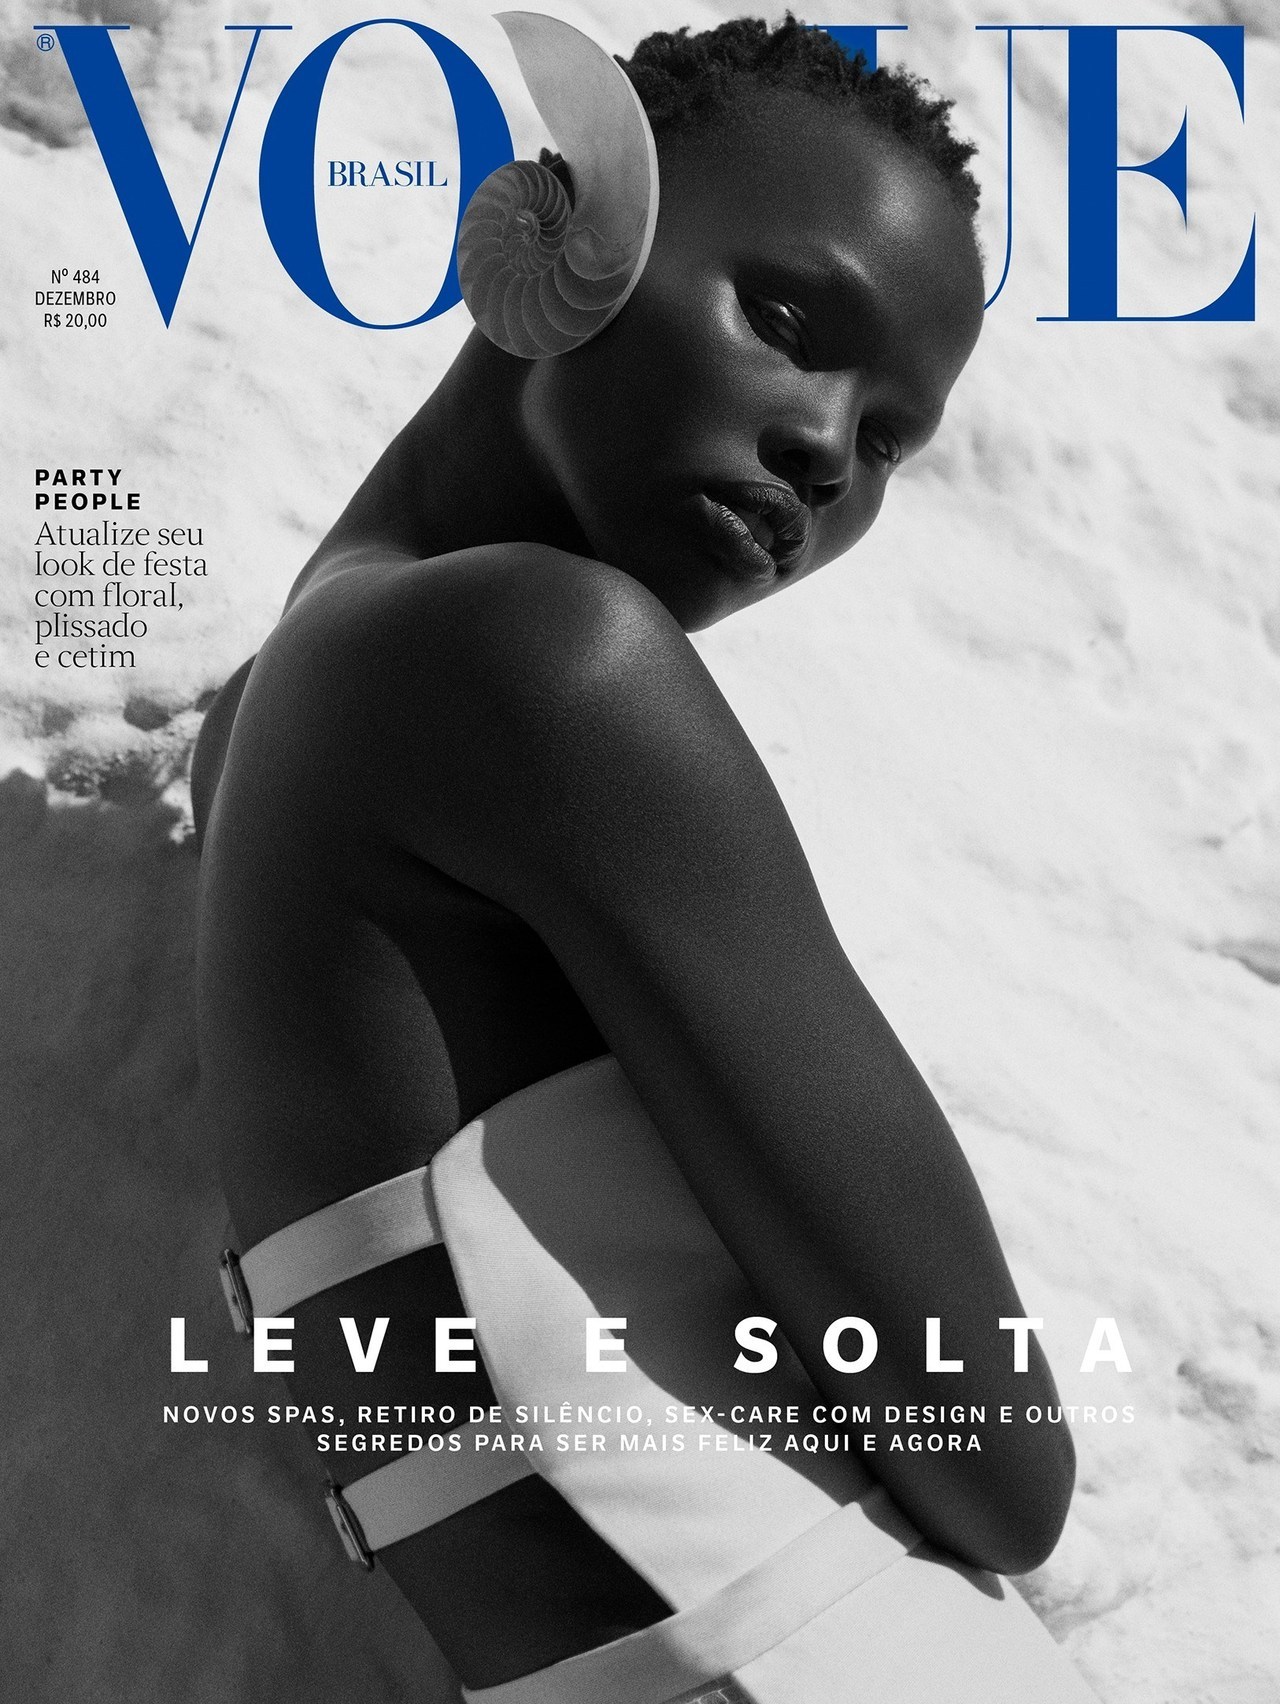 Vogue Cover News, Latest Vogue Cover Updates, Stories & Photos